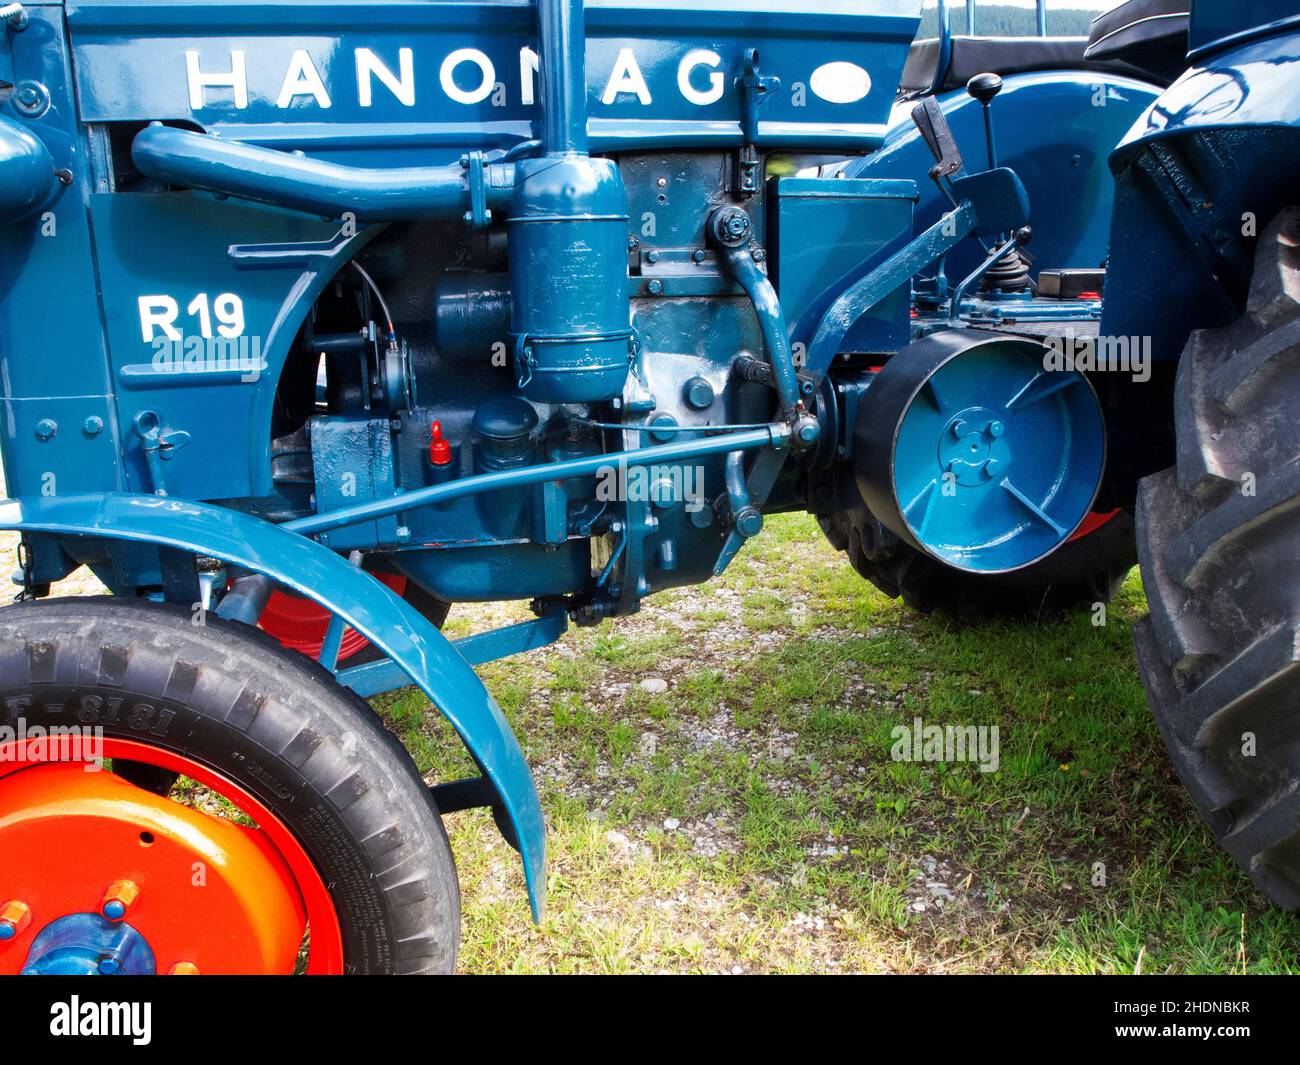 engine, tractor, hanomag, engines, motor, tractors Stock Photo